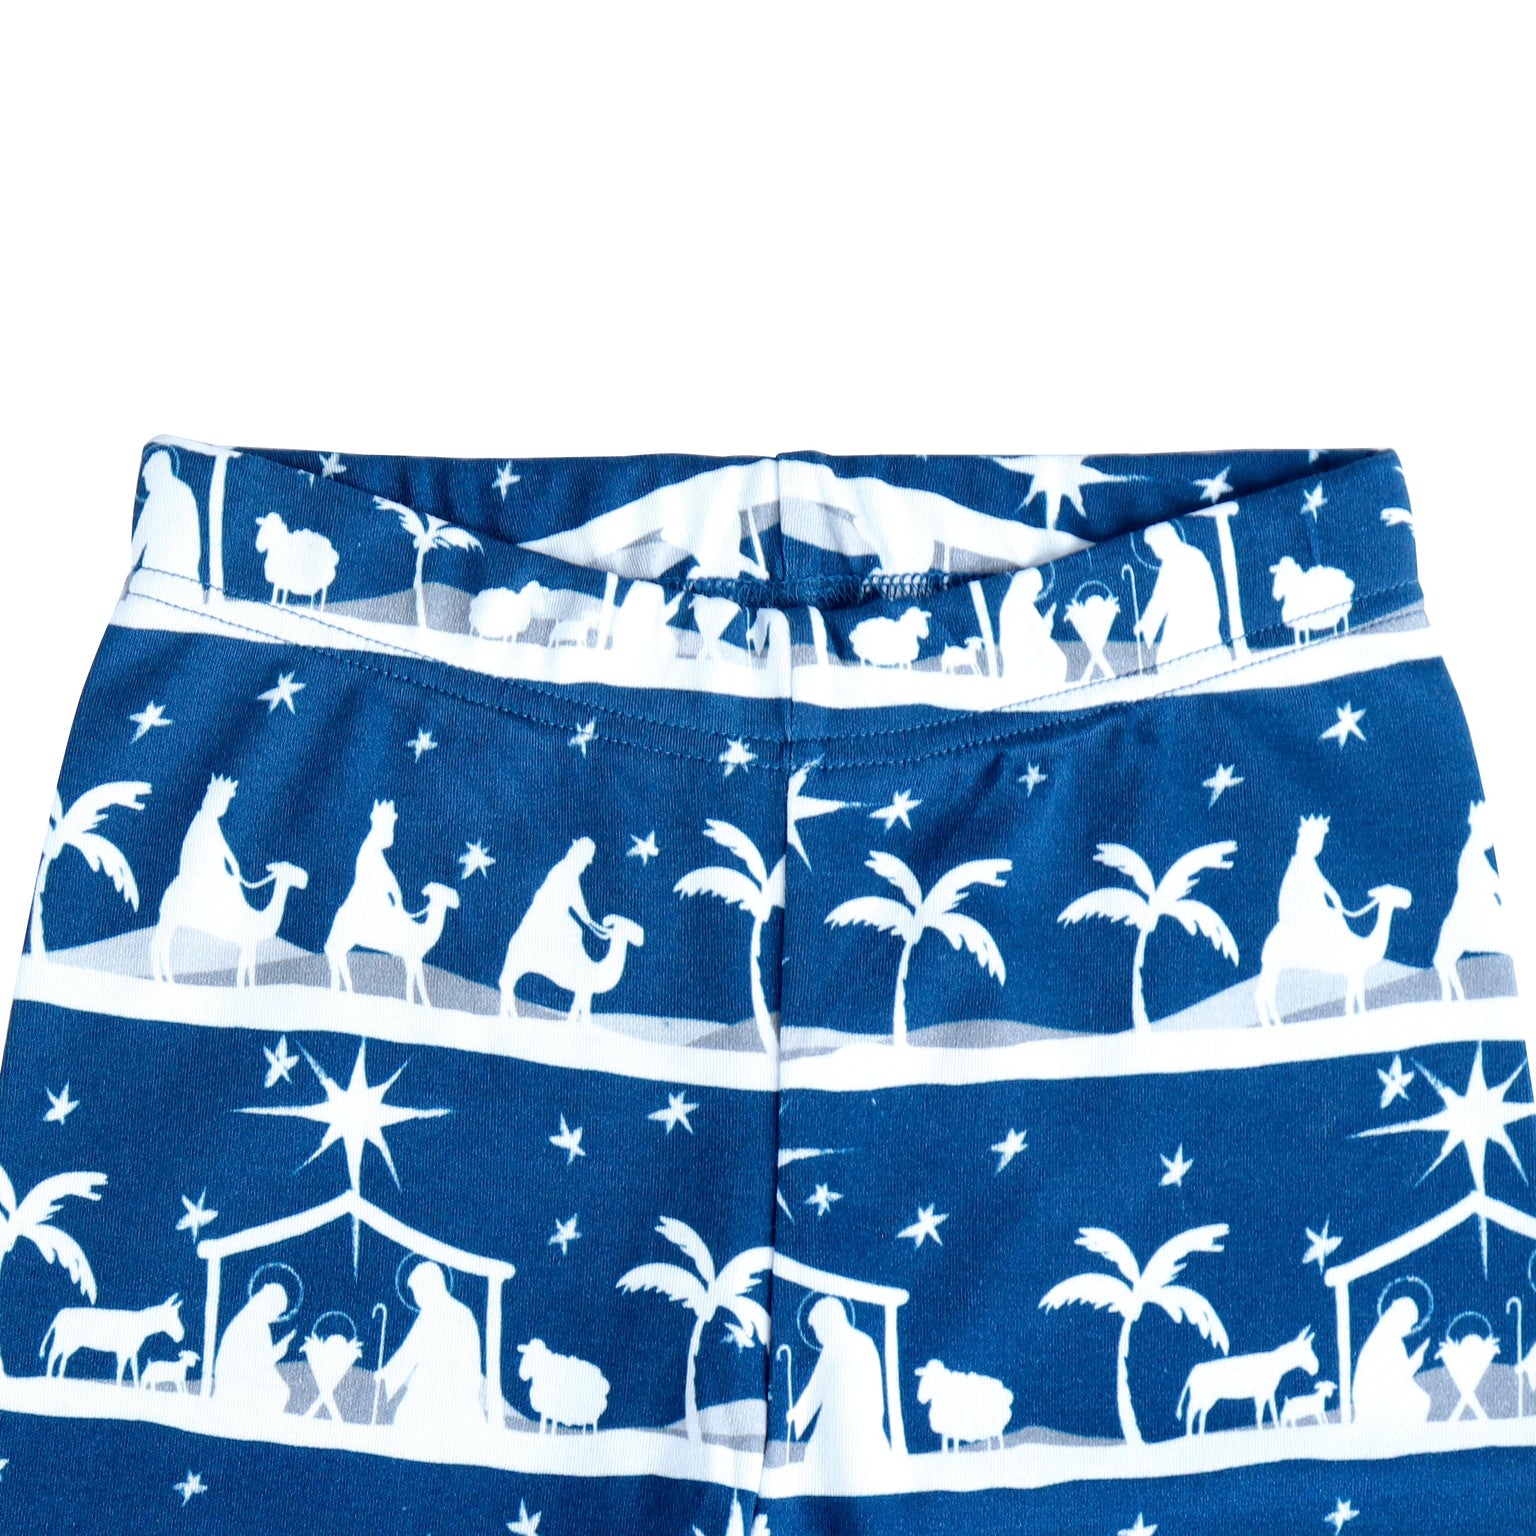 Starry Night Christmas PJ Shorts Set